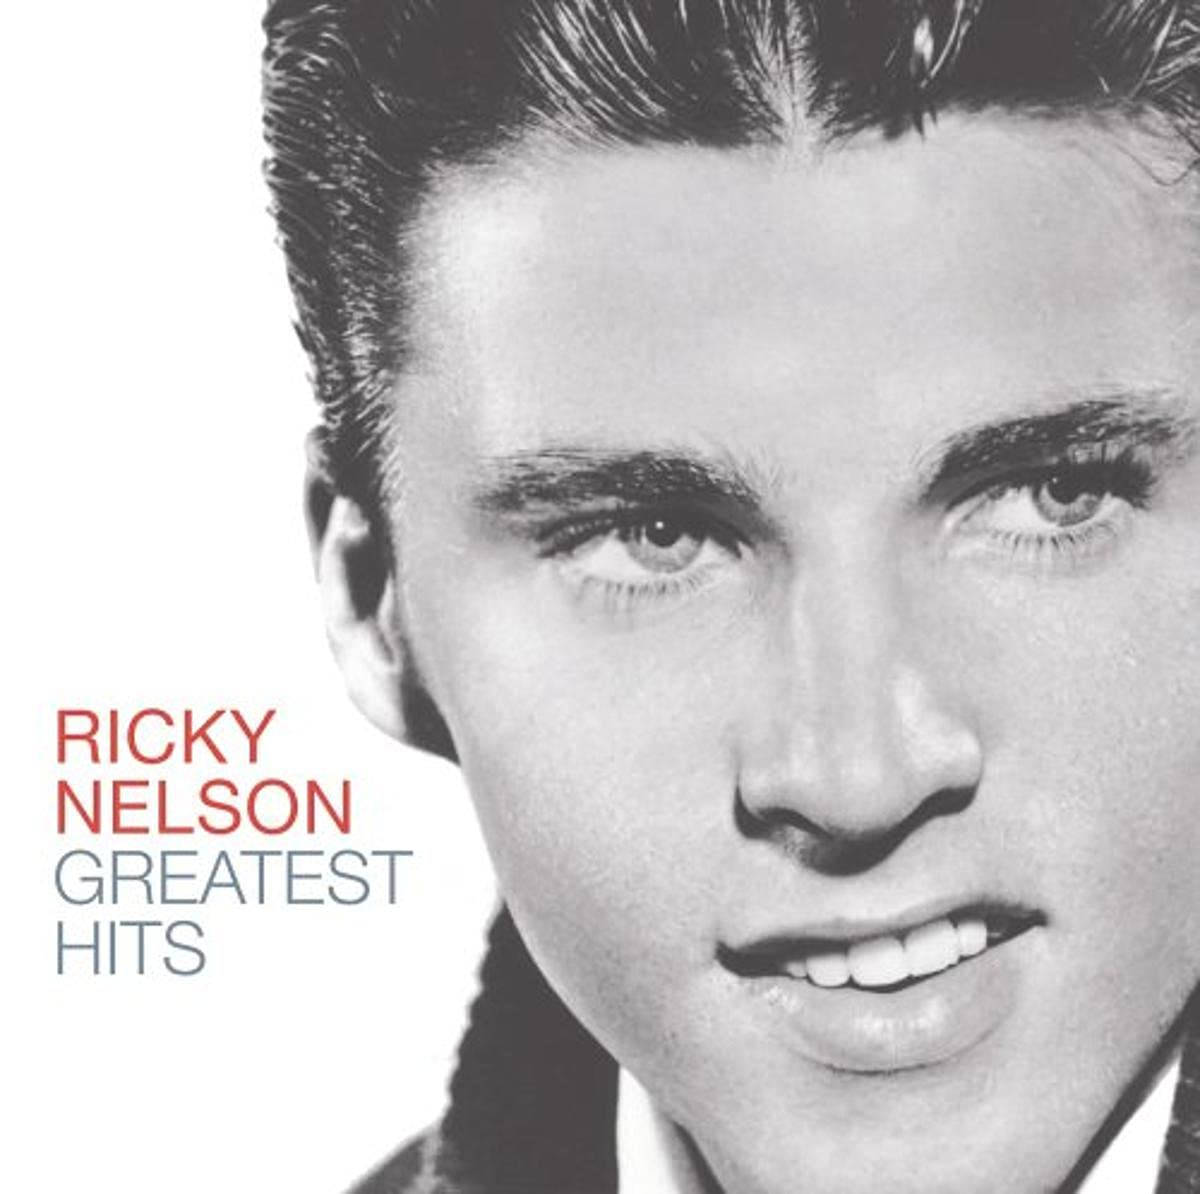 Rick Nelson Greatest Hits Album Cover Wallpaper